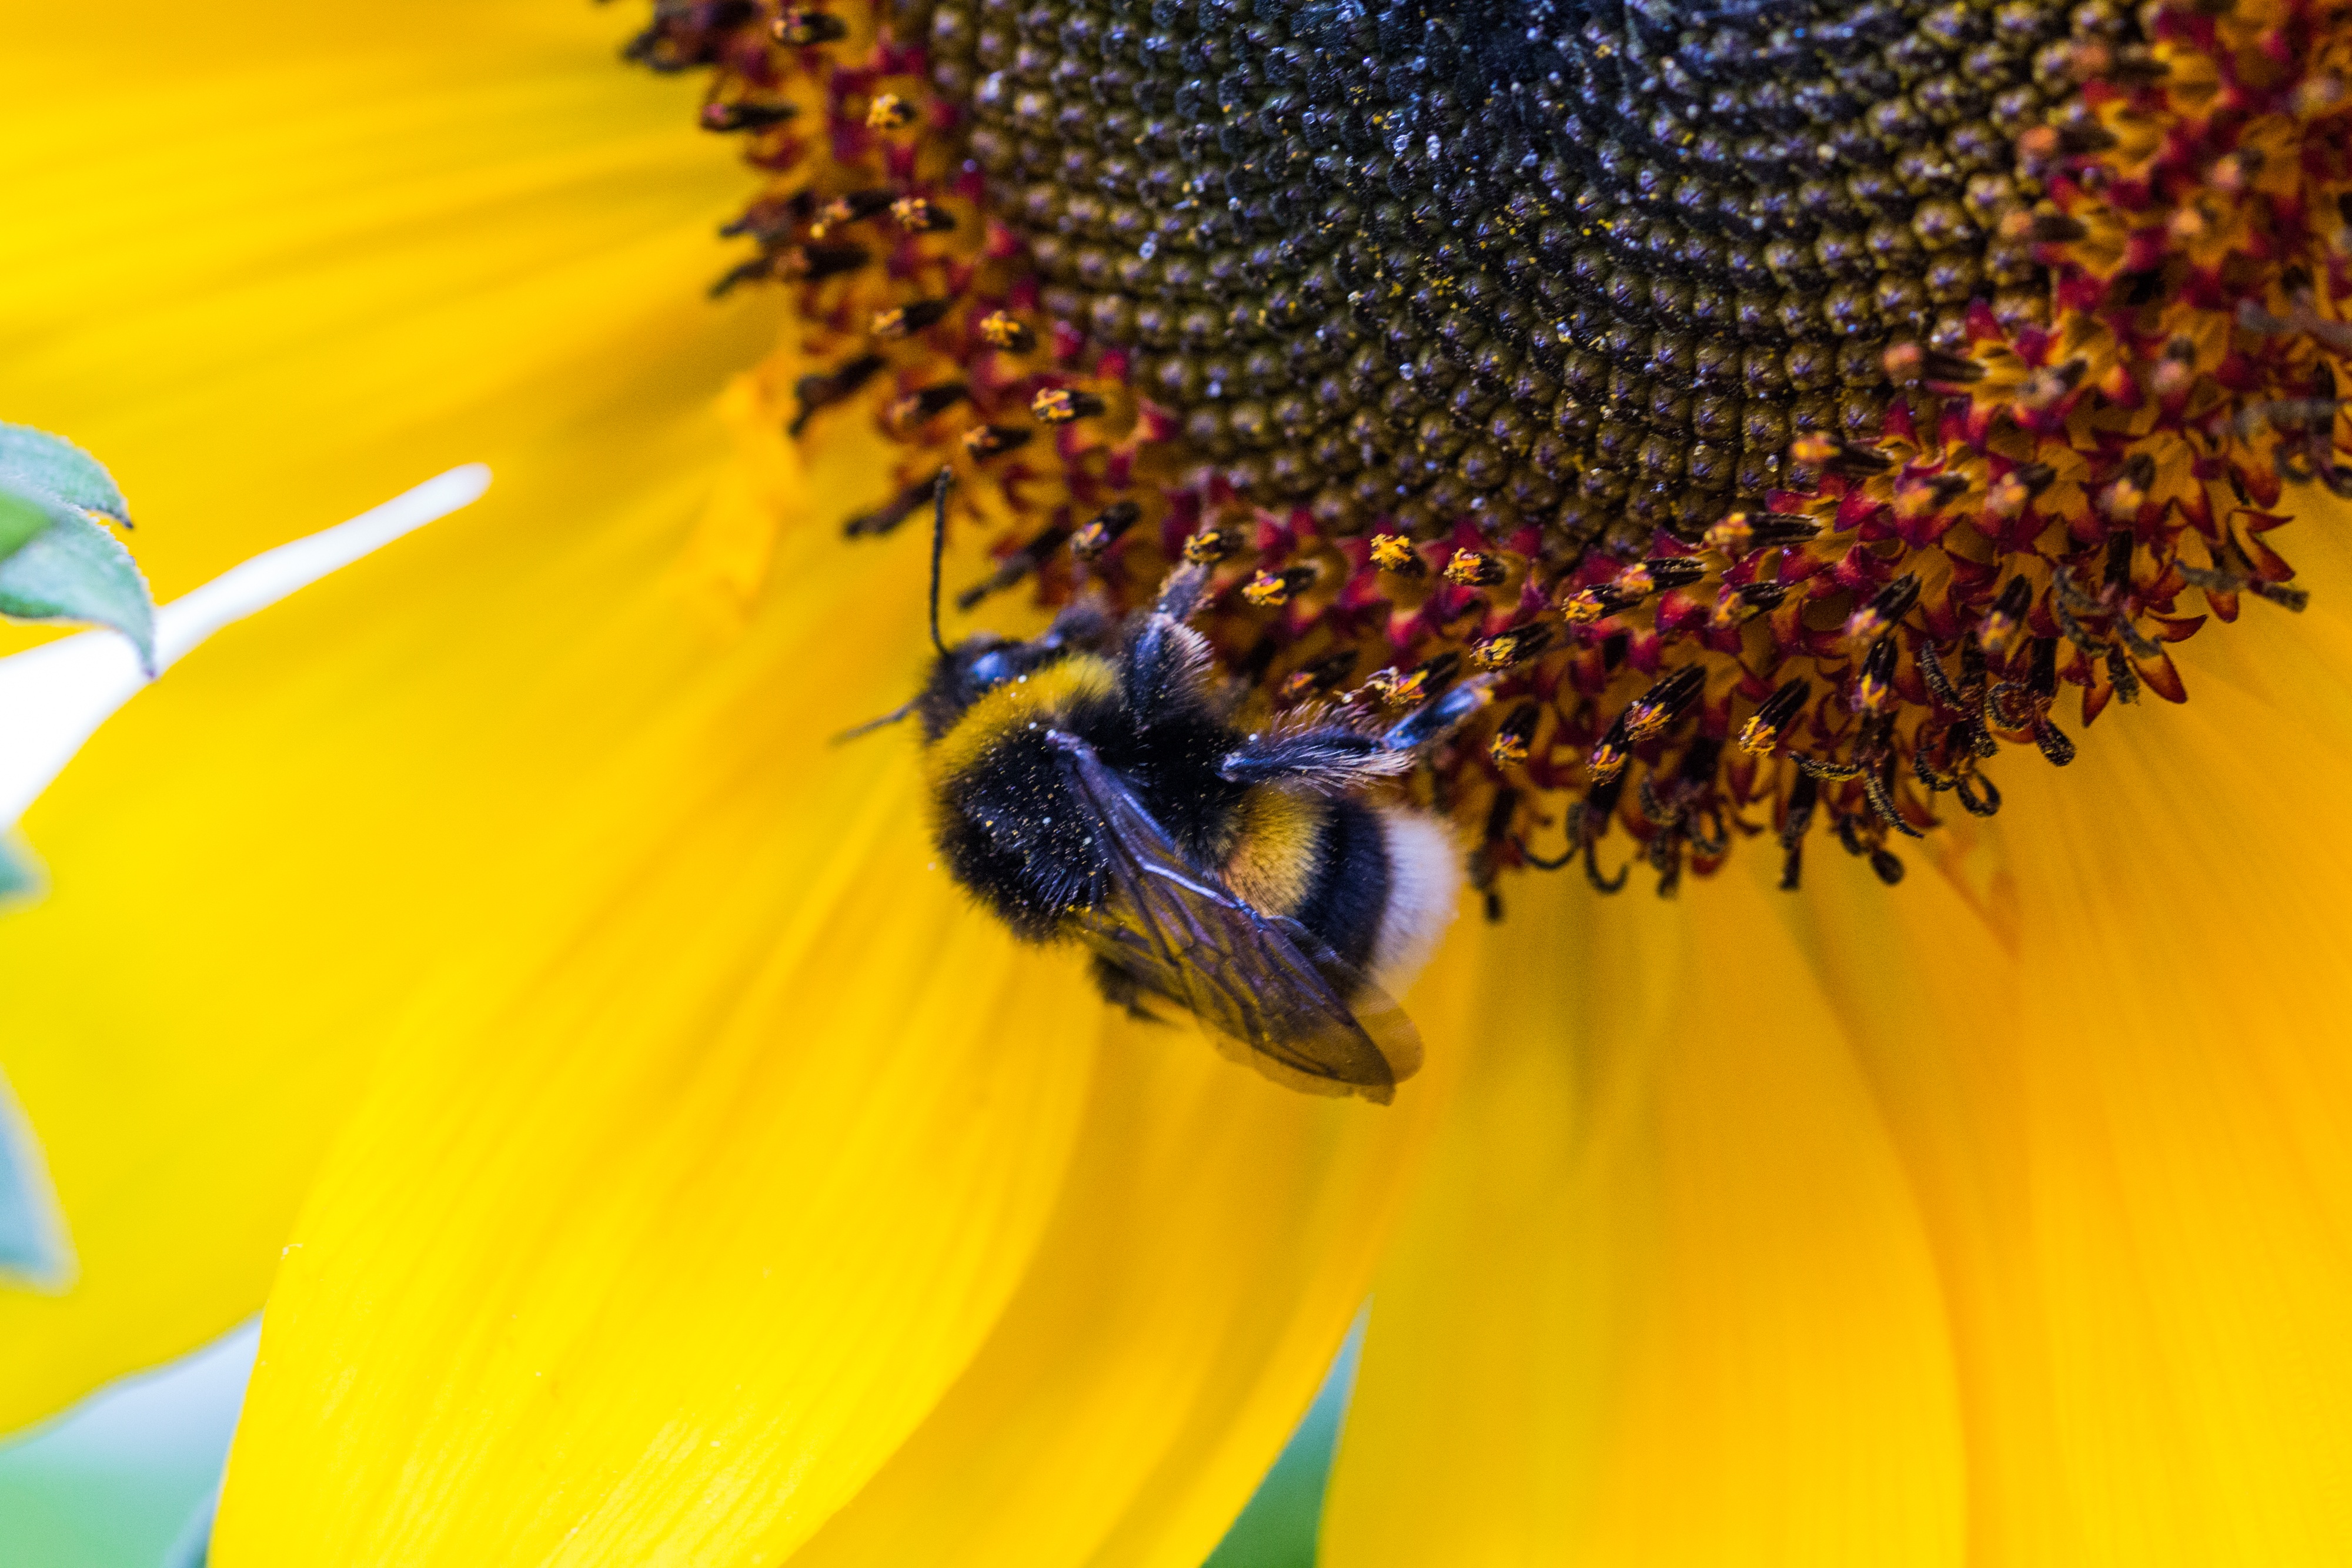 Hummel bee on the flower photo